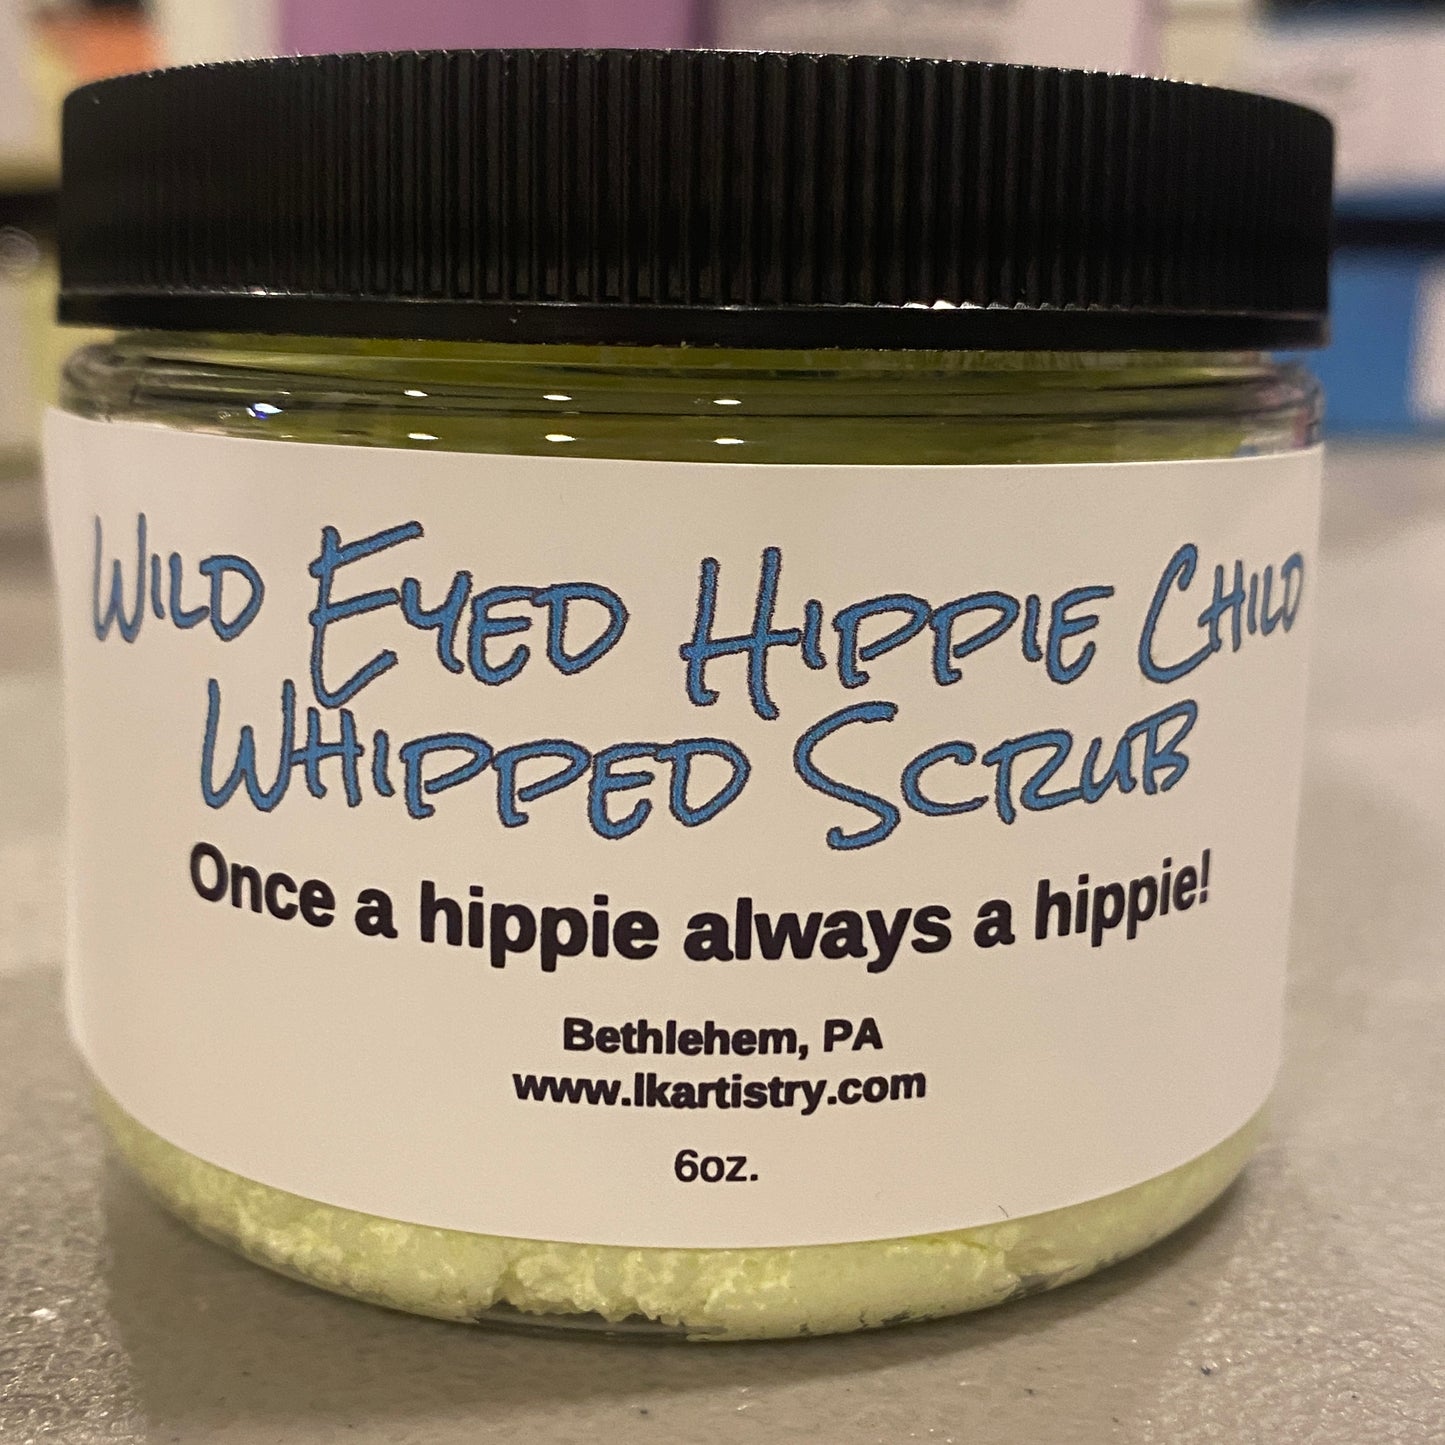 Wild Eyed Hippie Child Whipped Scrub - Smells like Nag Chompa chompin atcha nostrils.